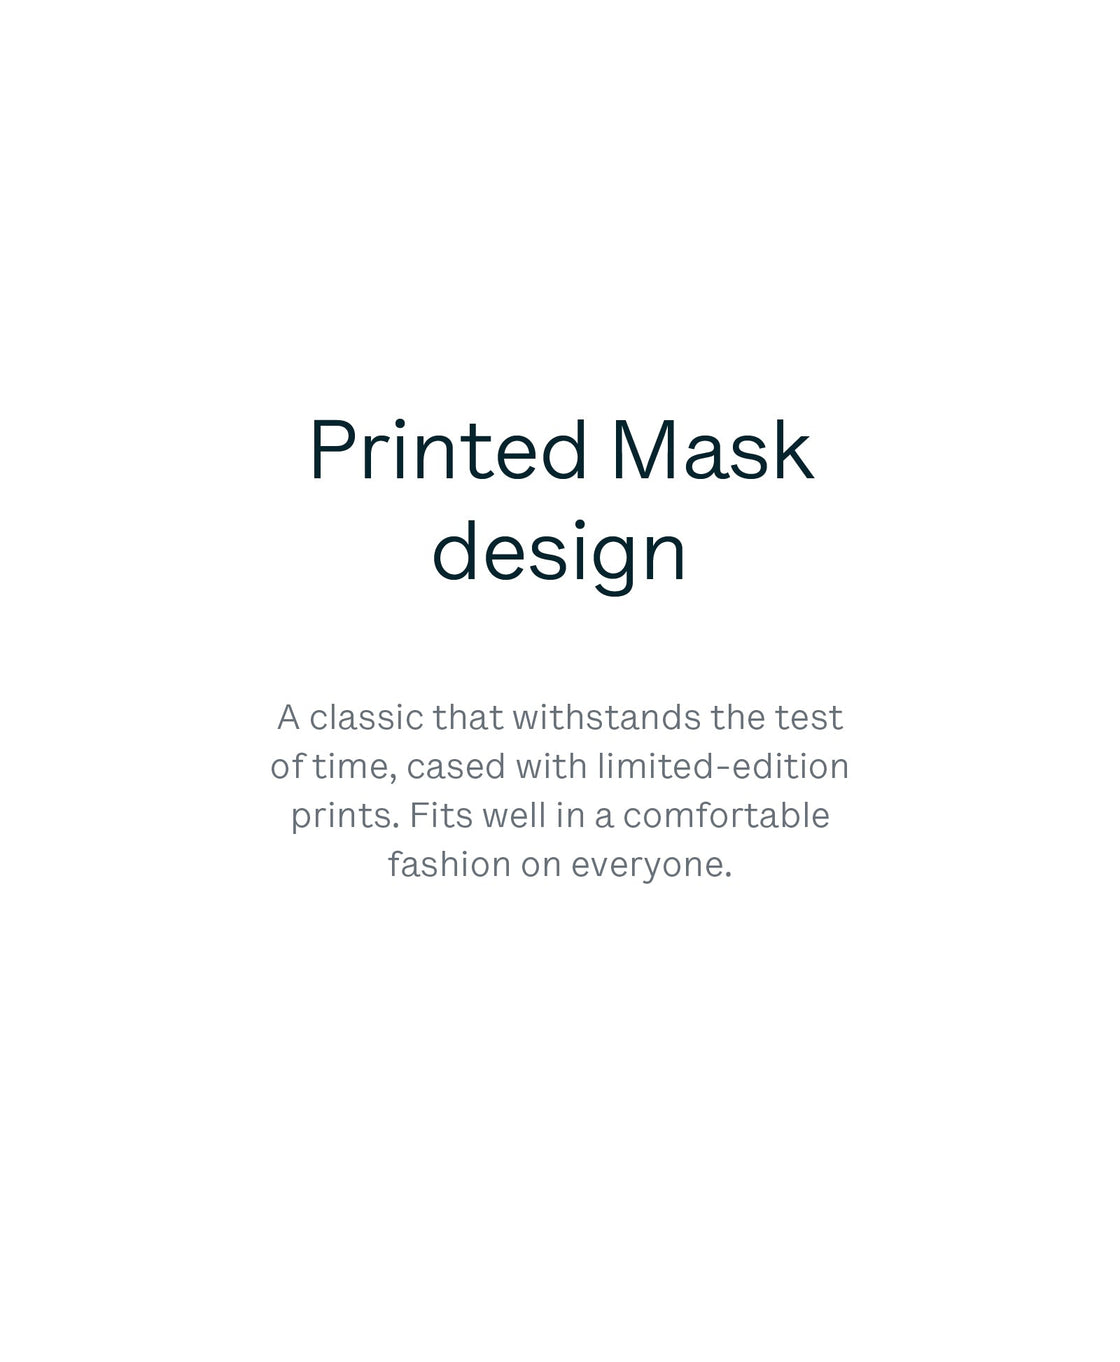 4 Universal Printed Masks